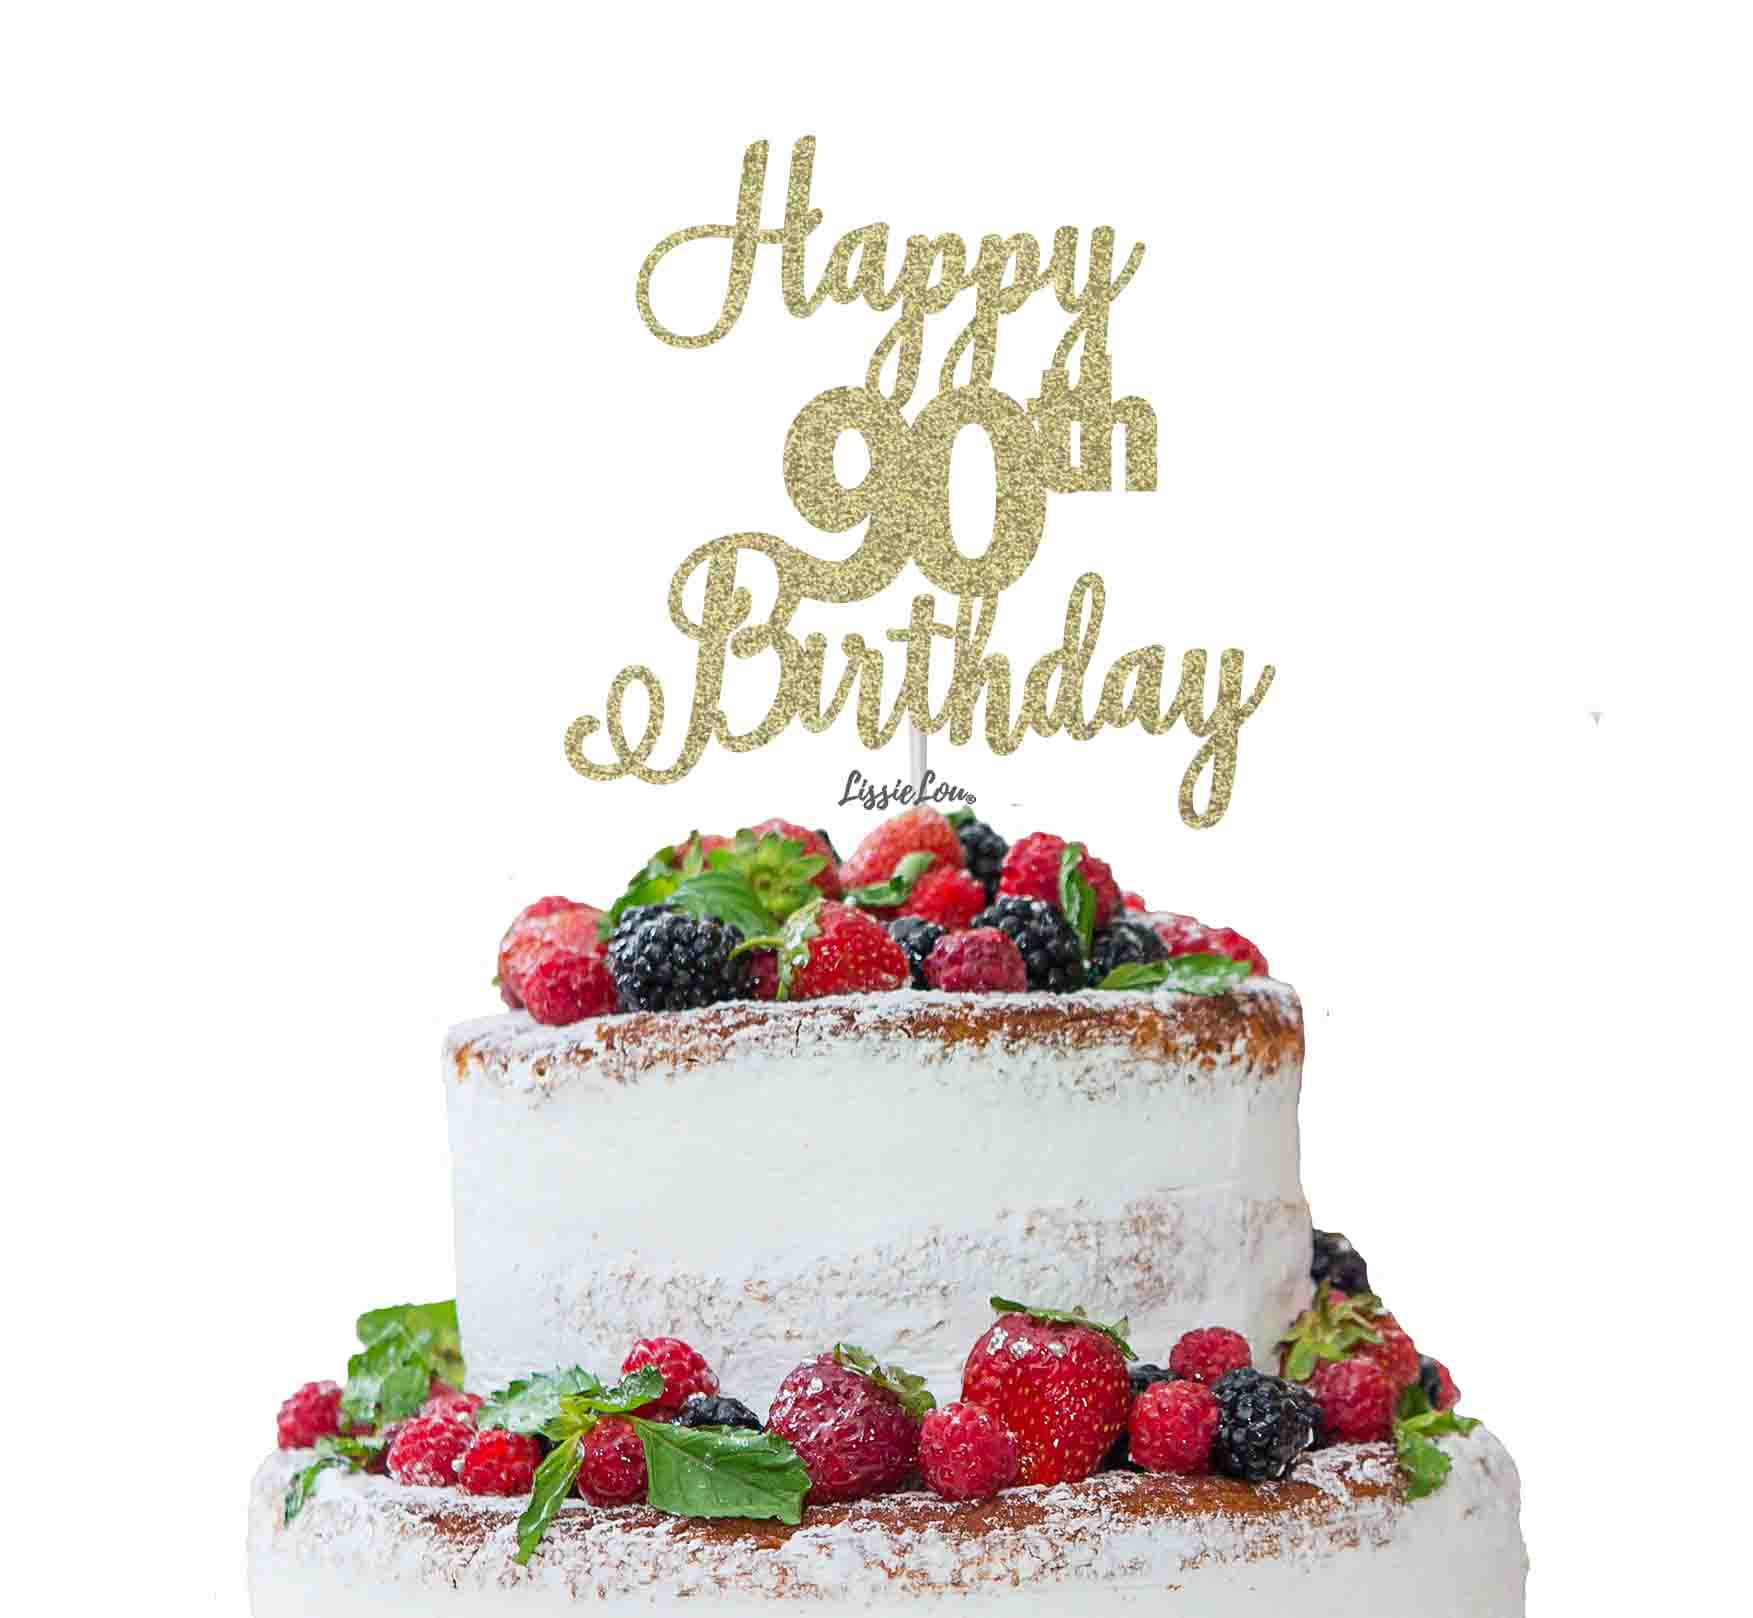 90th birthday cake 🎂 #cakedecorating #viralvideo #cakedesign - YouTube